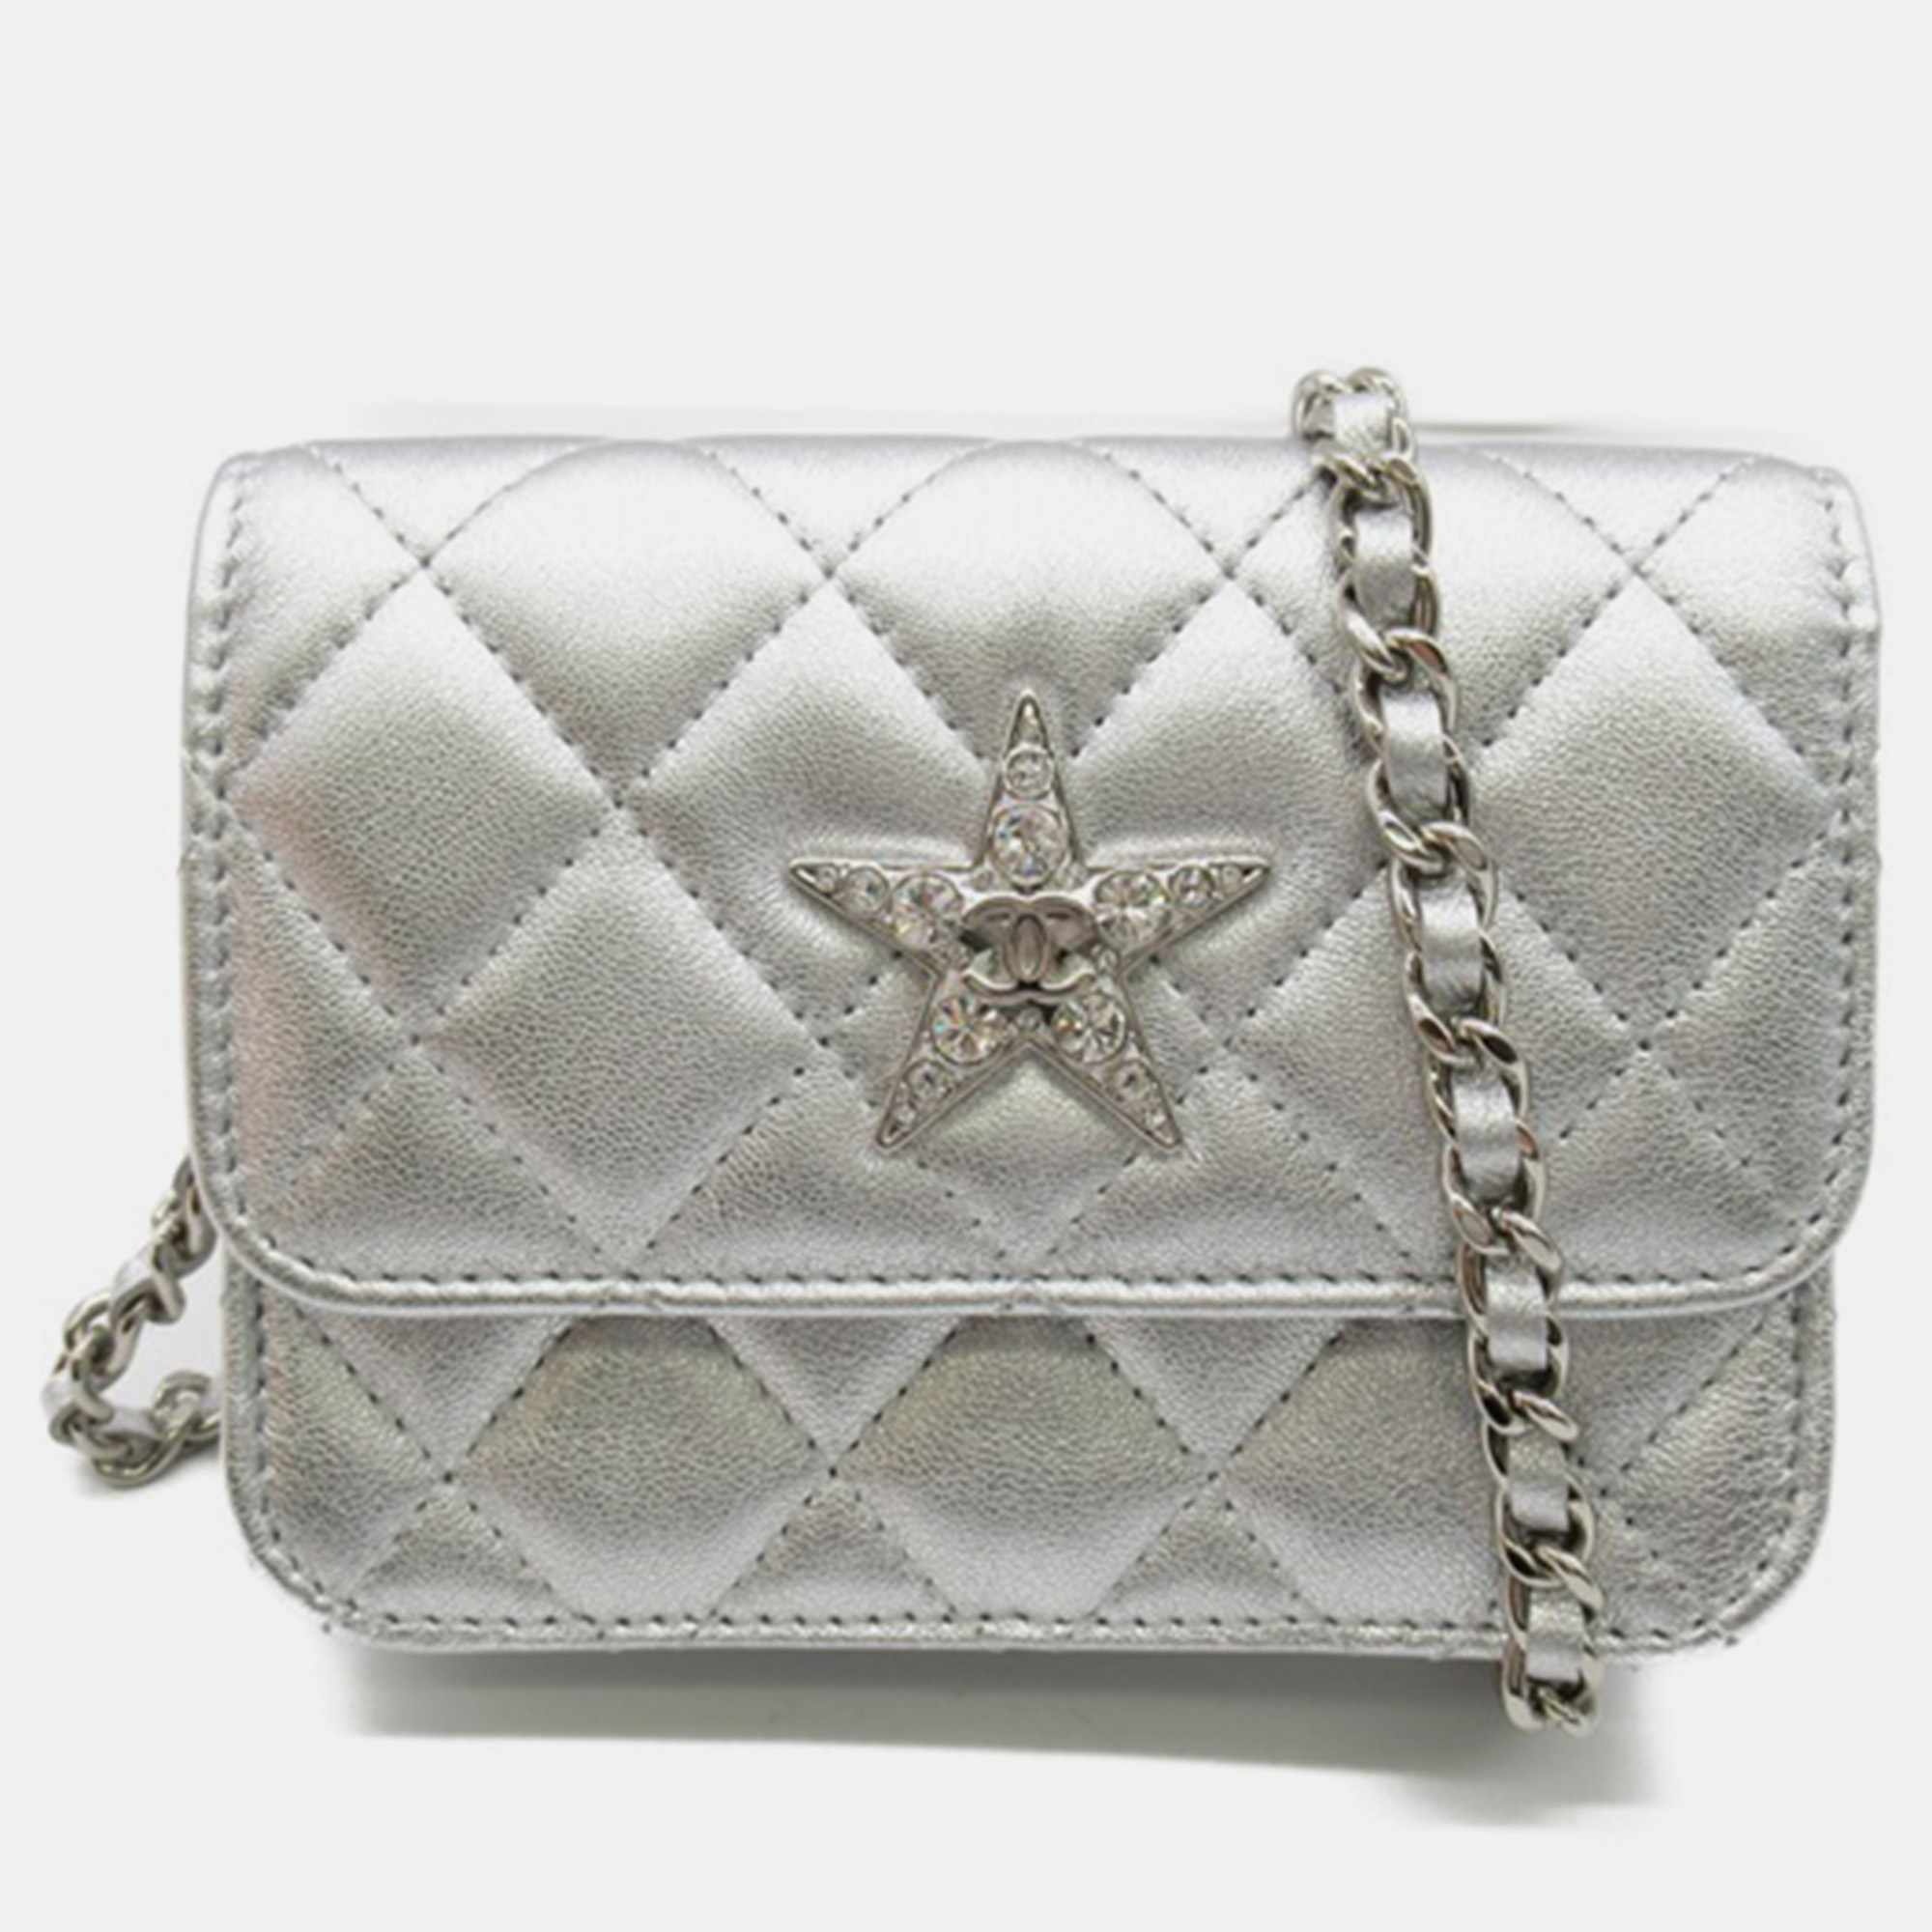 Chanel silver lambskin leather wallet on chain